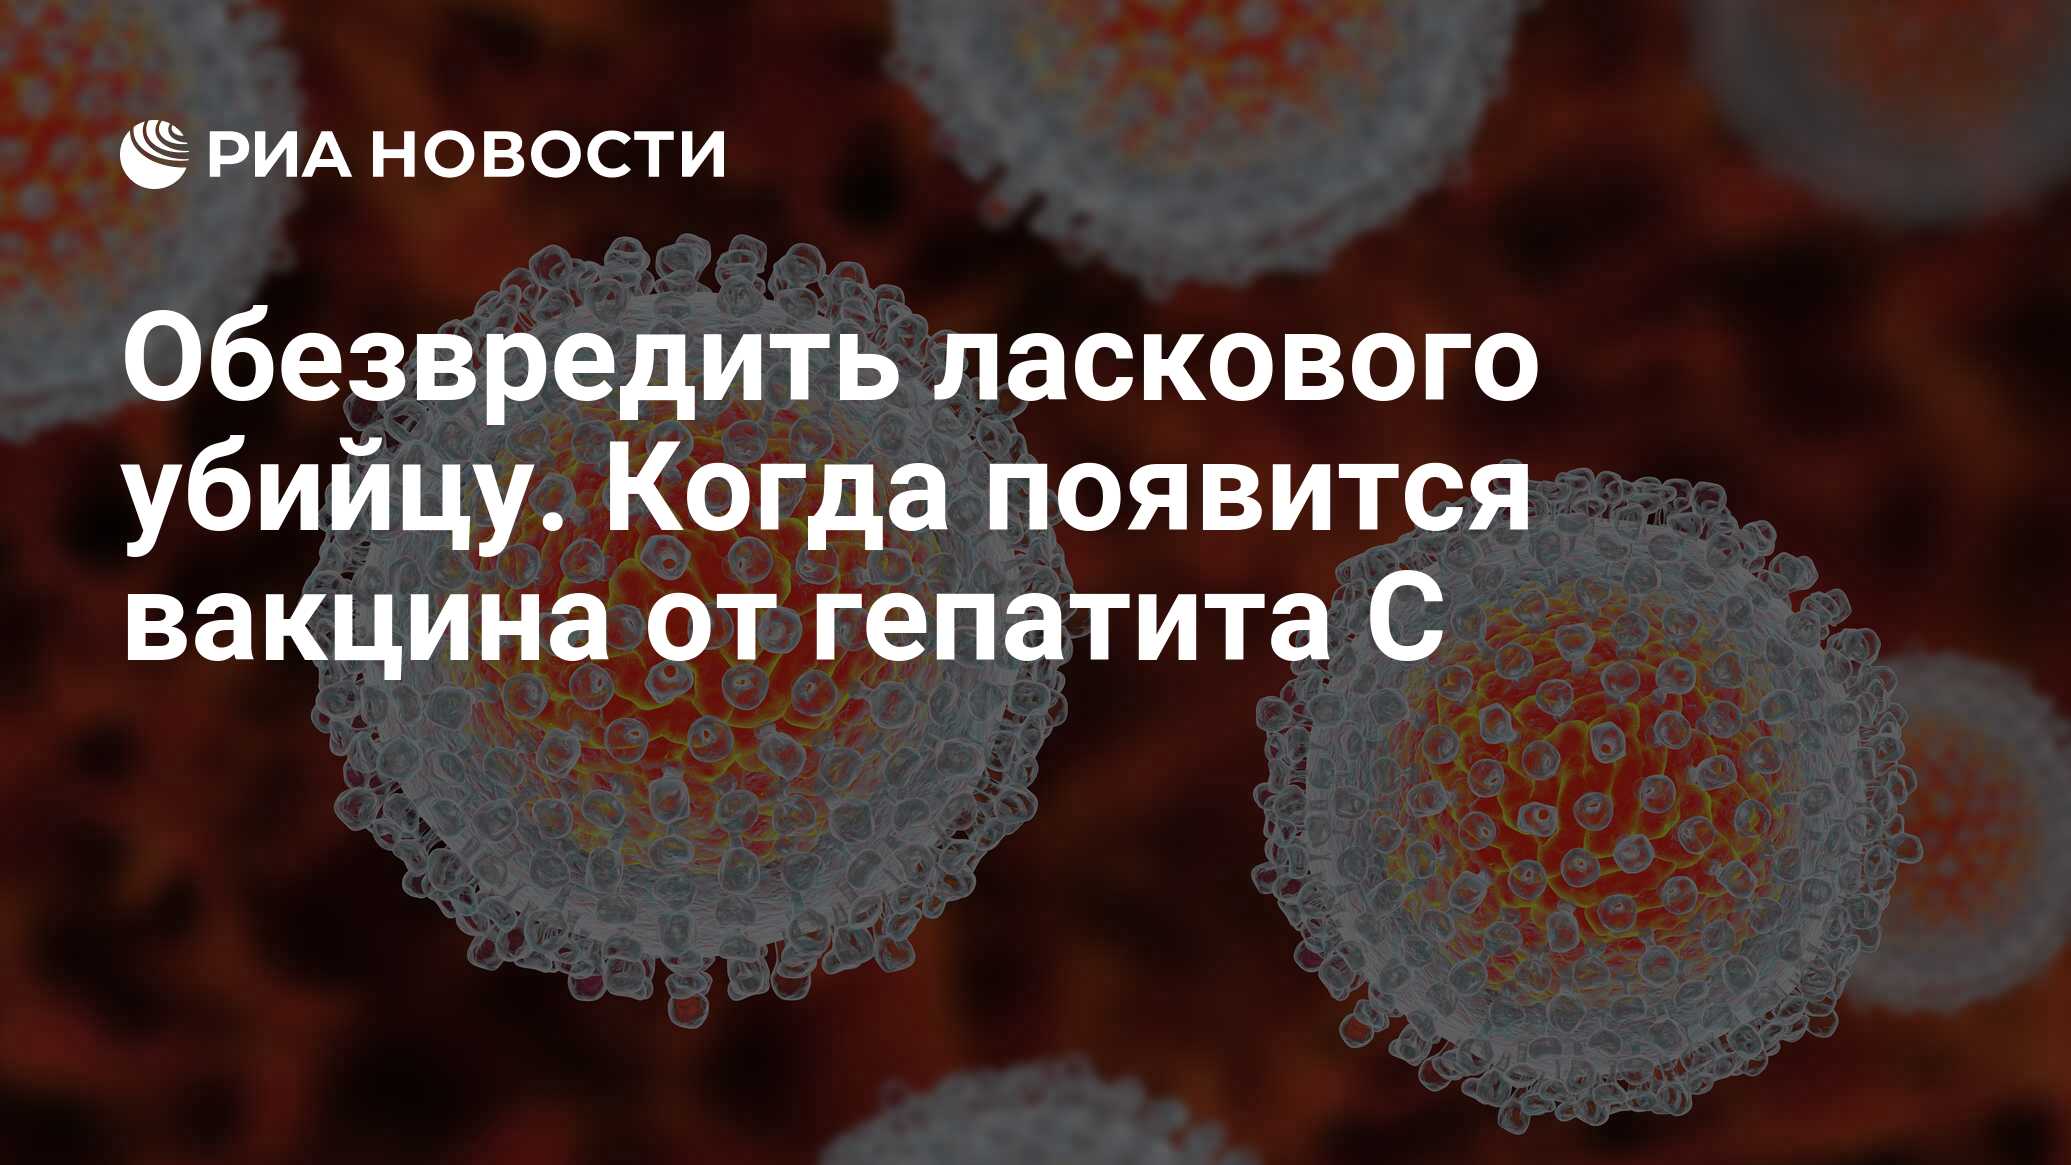 Когда в россии появится вакцина от гепатита с thumbnail